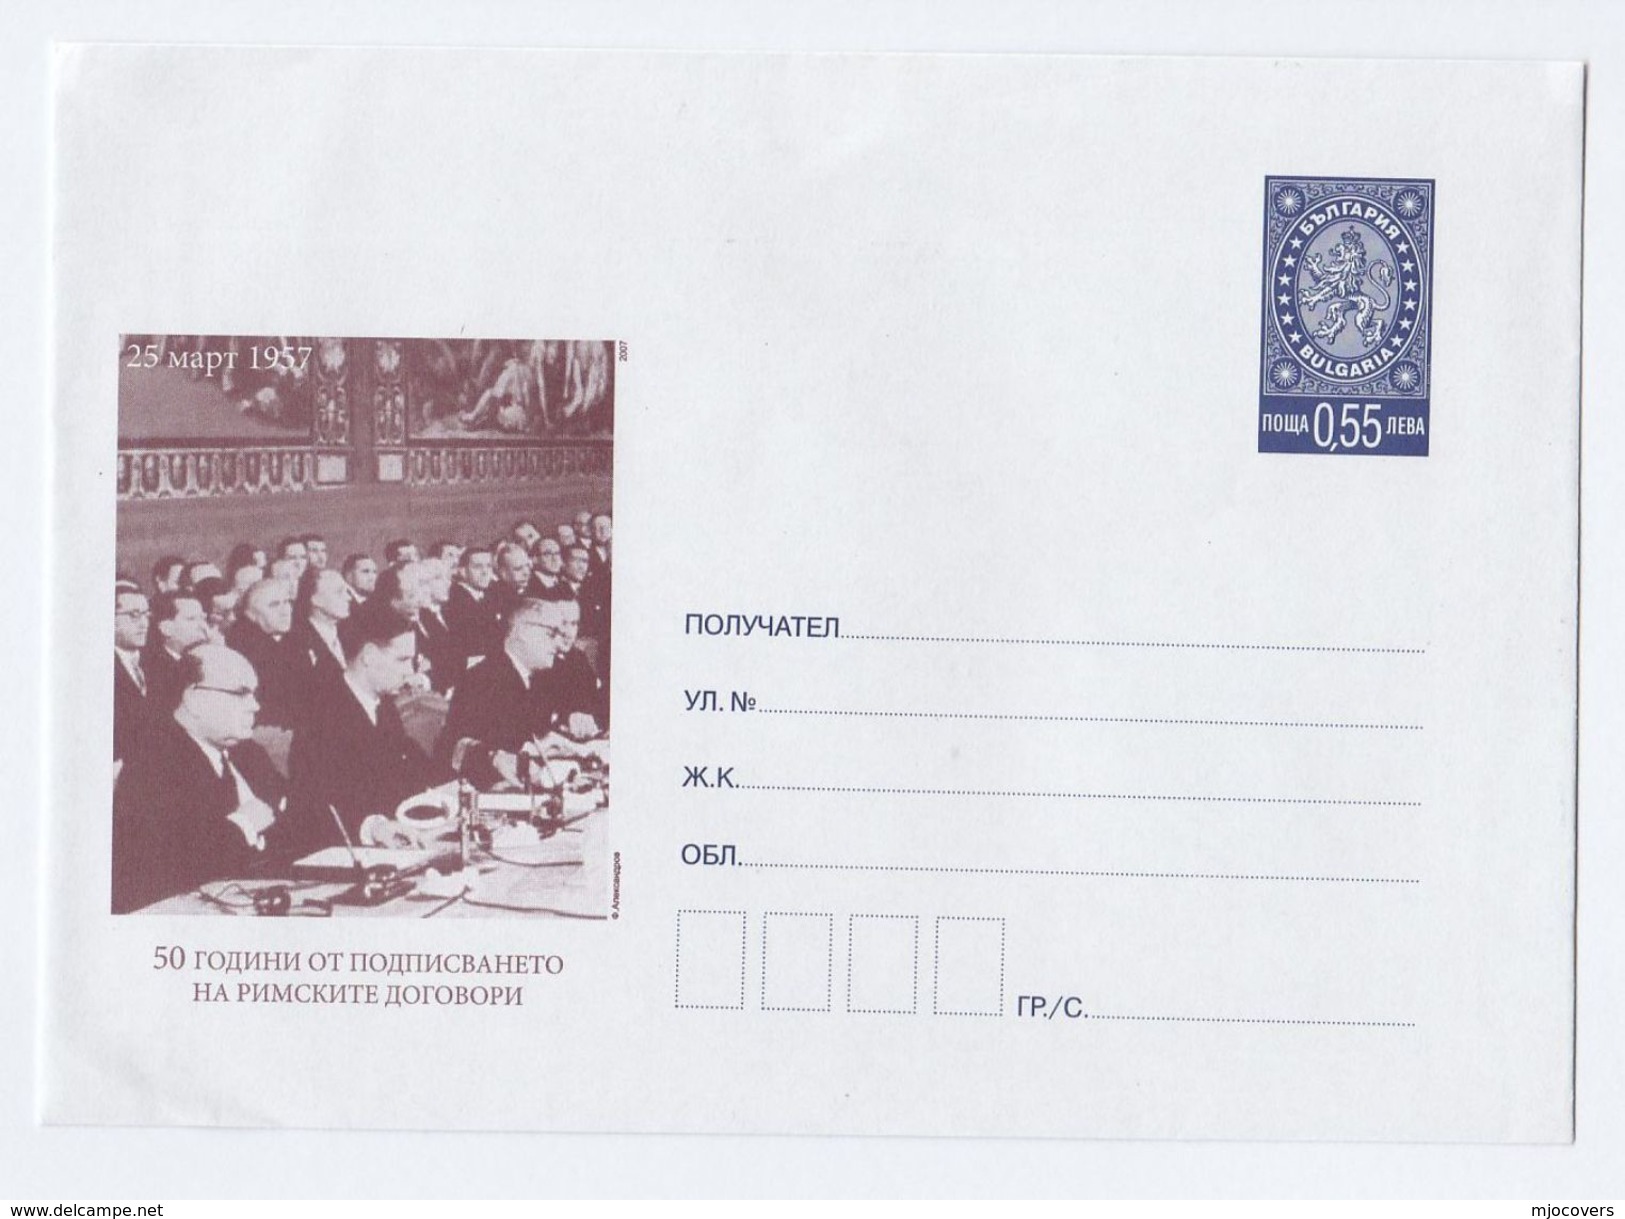 2007 BULGARIA Postal STATIONERY Illus ANNIV TREATY OF ROME European Community Union Lion Stamps Cover - European Community